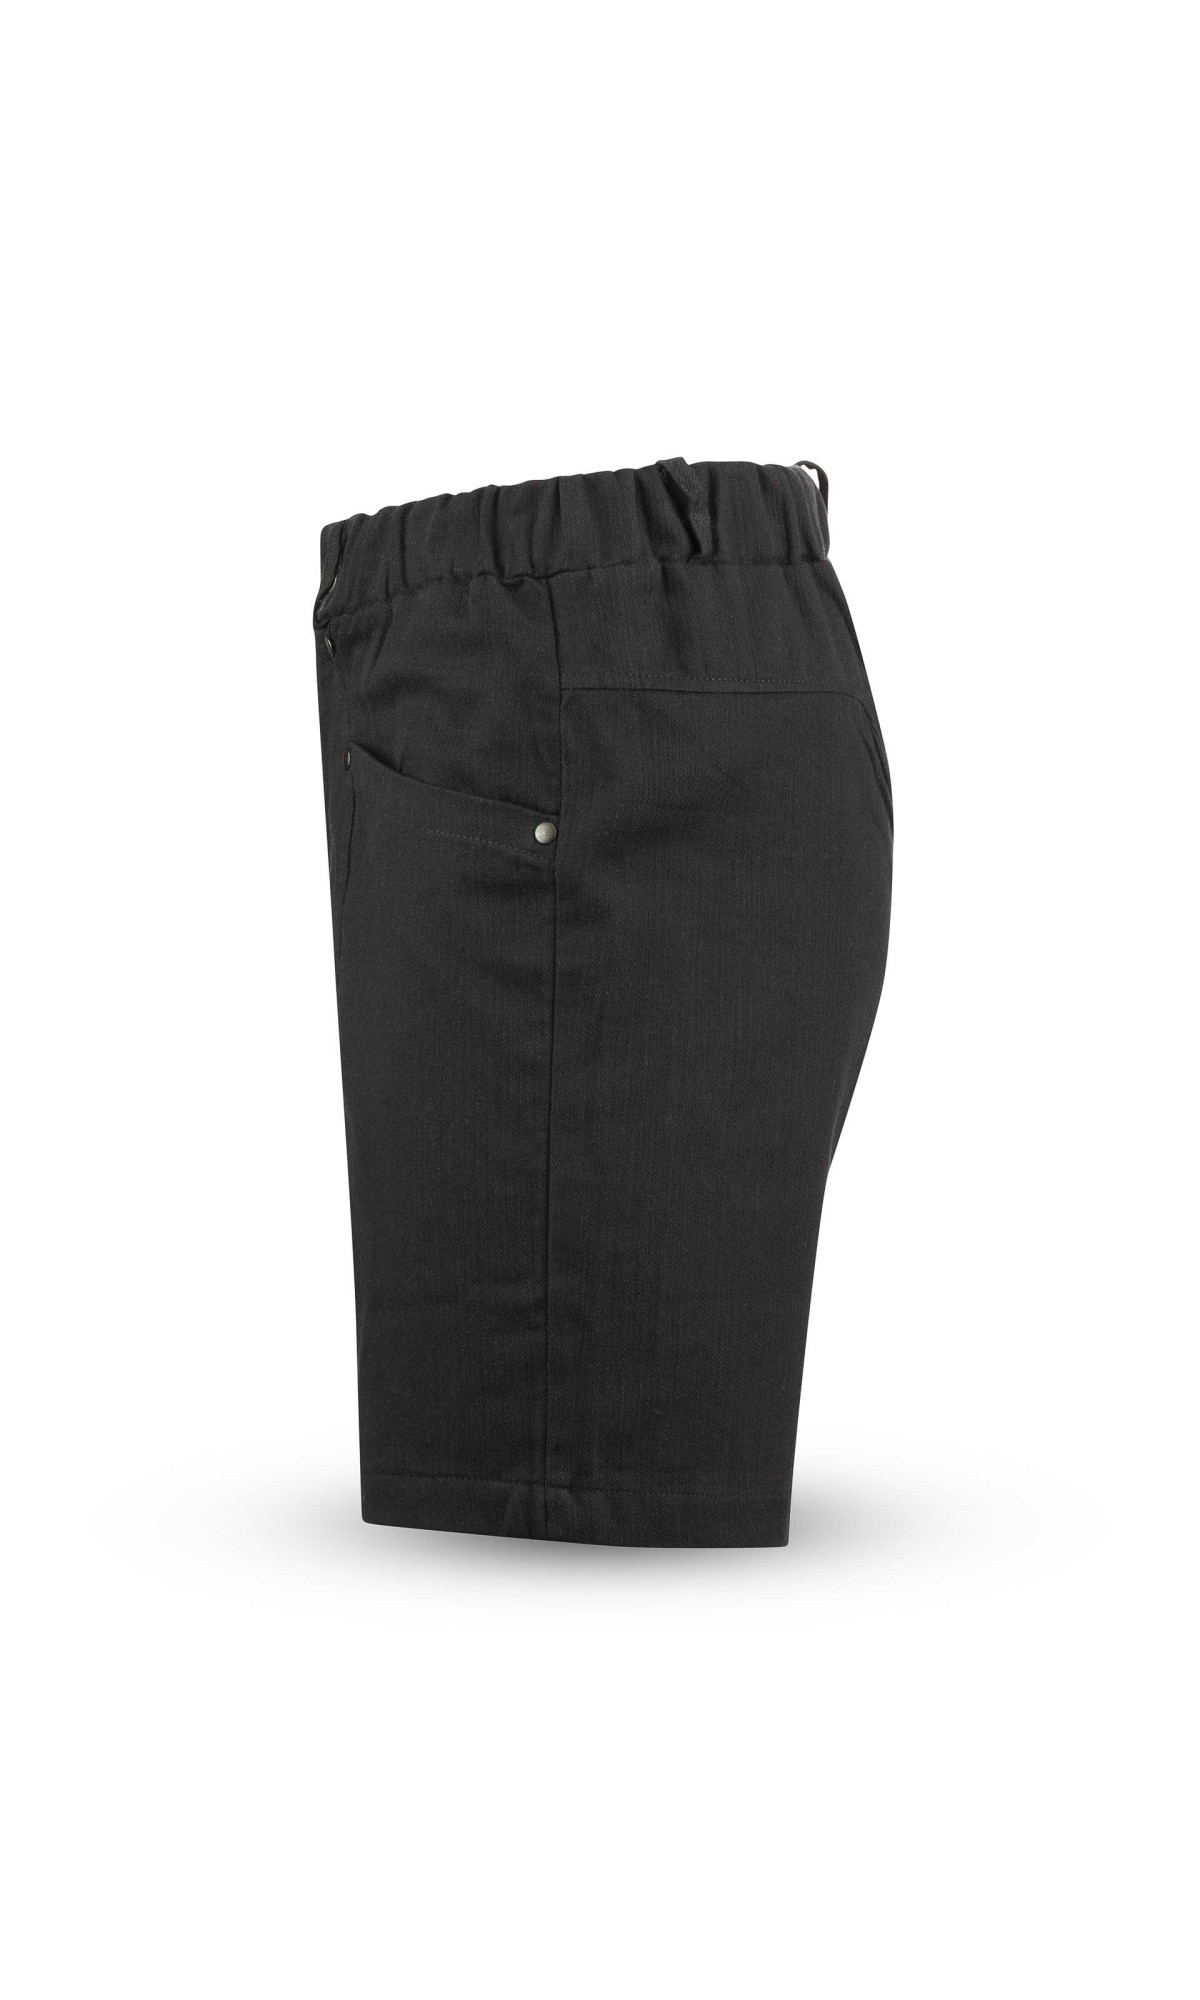 Untitled Folder Deep Well Pocket Void Black Shorts